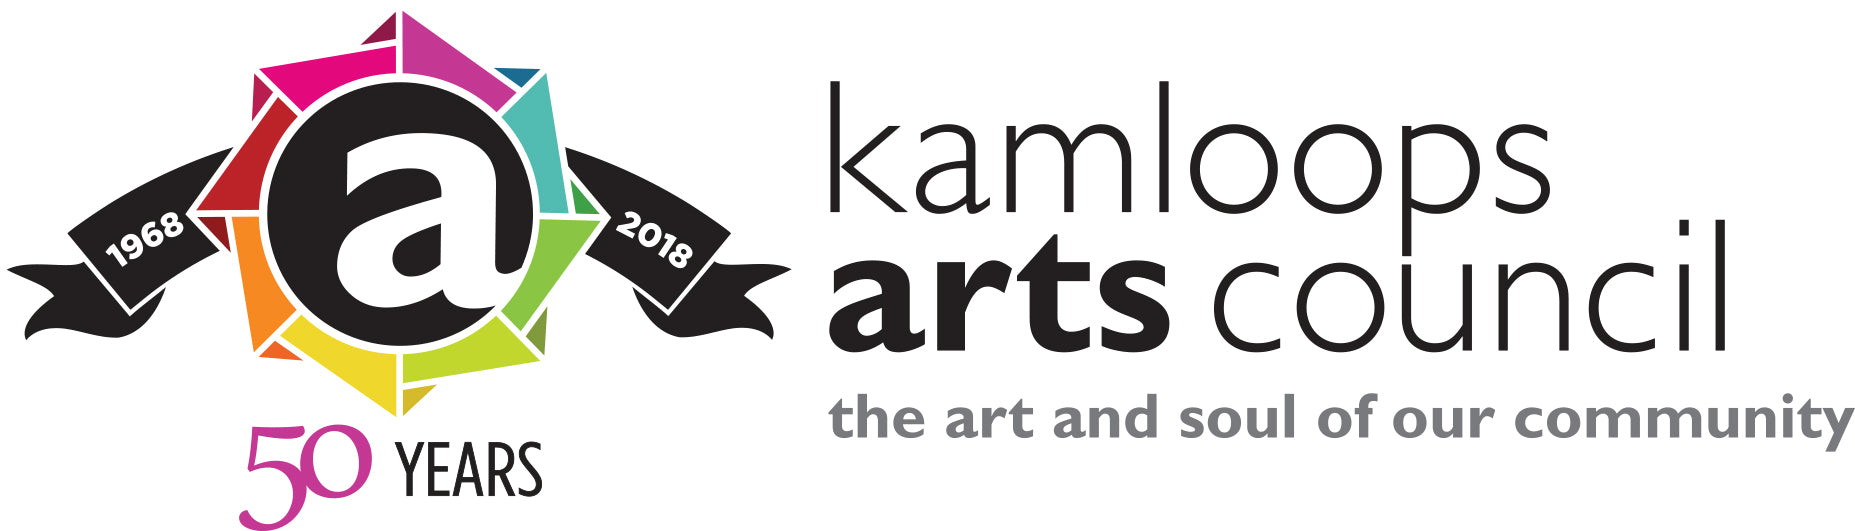 FUNDRAISER - Kamloops Arts Council